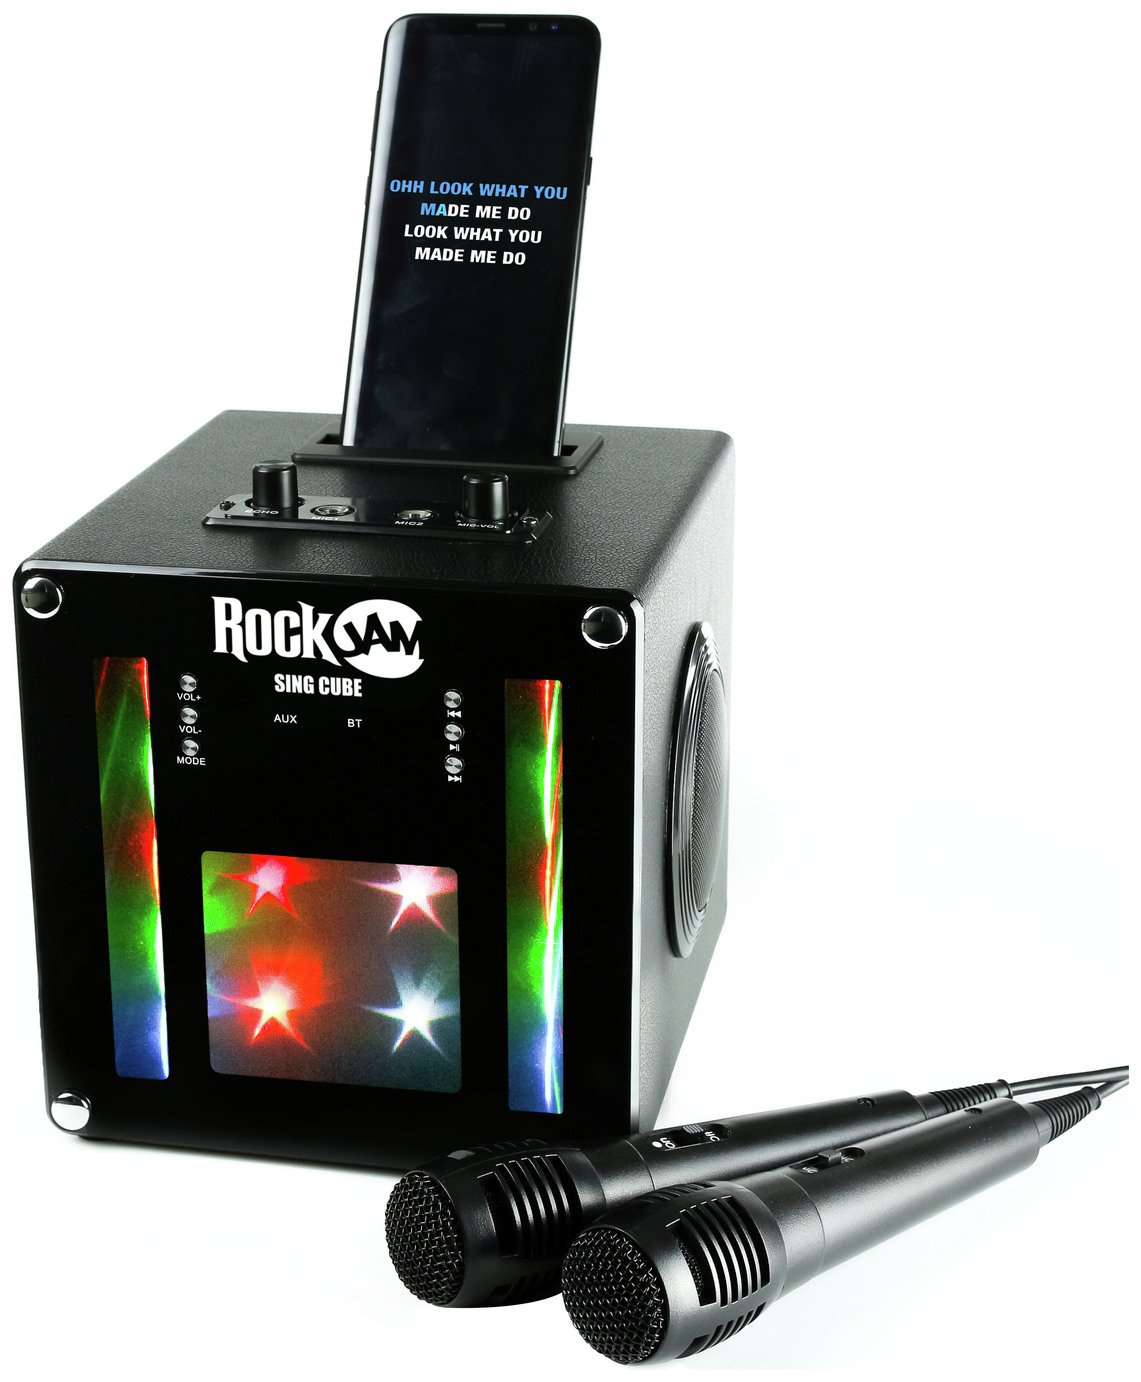 RockJam SingCube Bluetooth Karaoke Machine Review